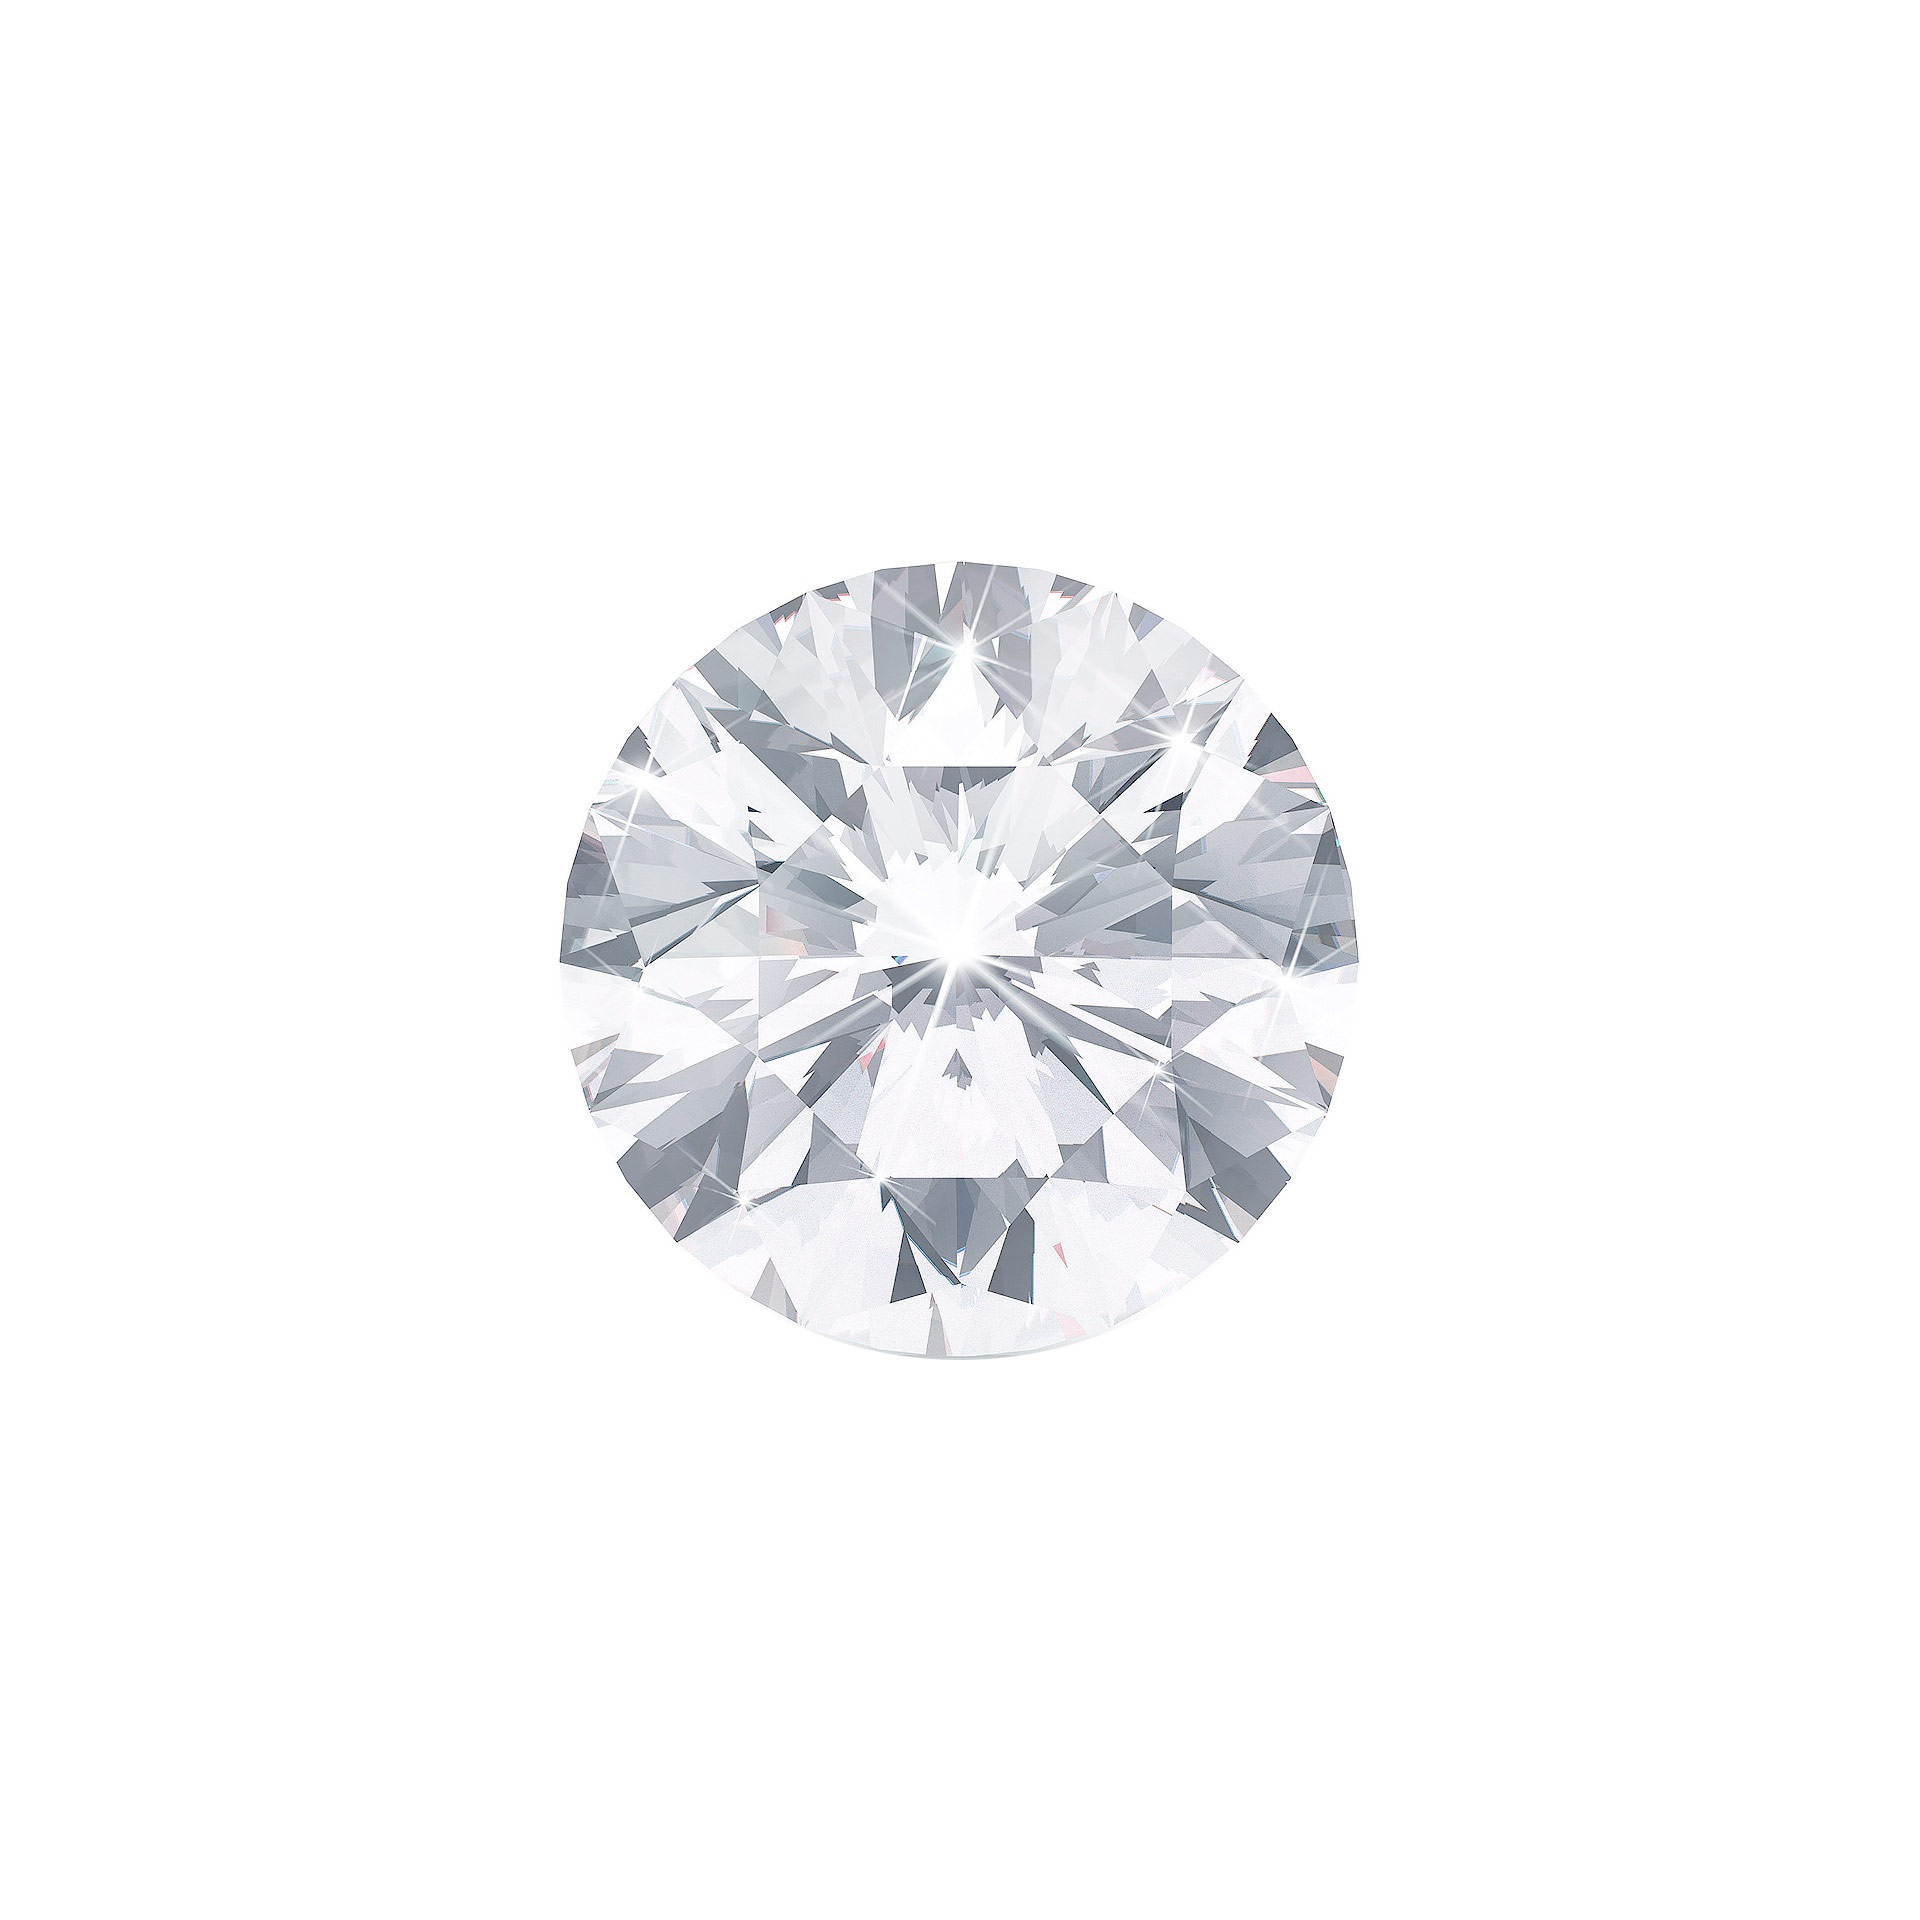 GIA Certified Round Brilliant Cut Diamond. 0.52 carat, (I color, SI2 clarity)